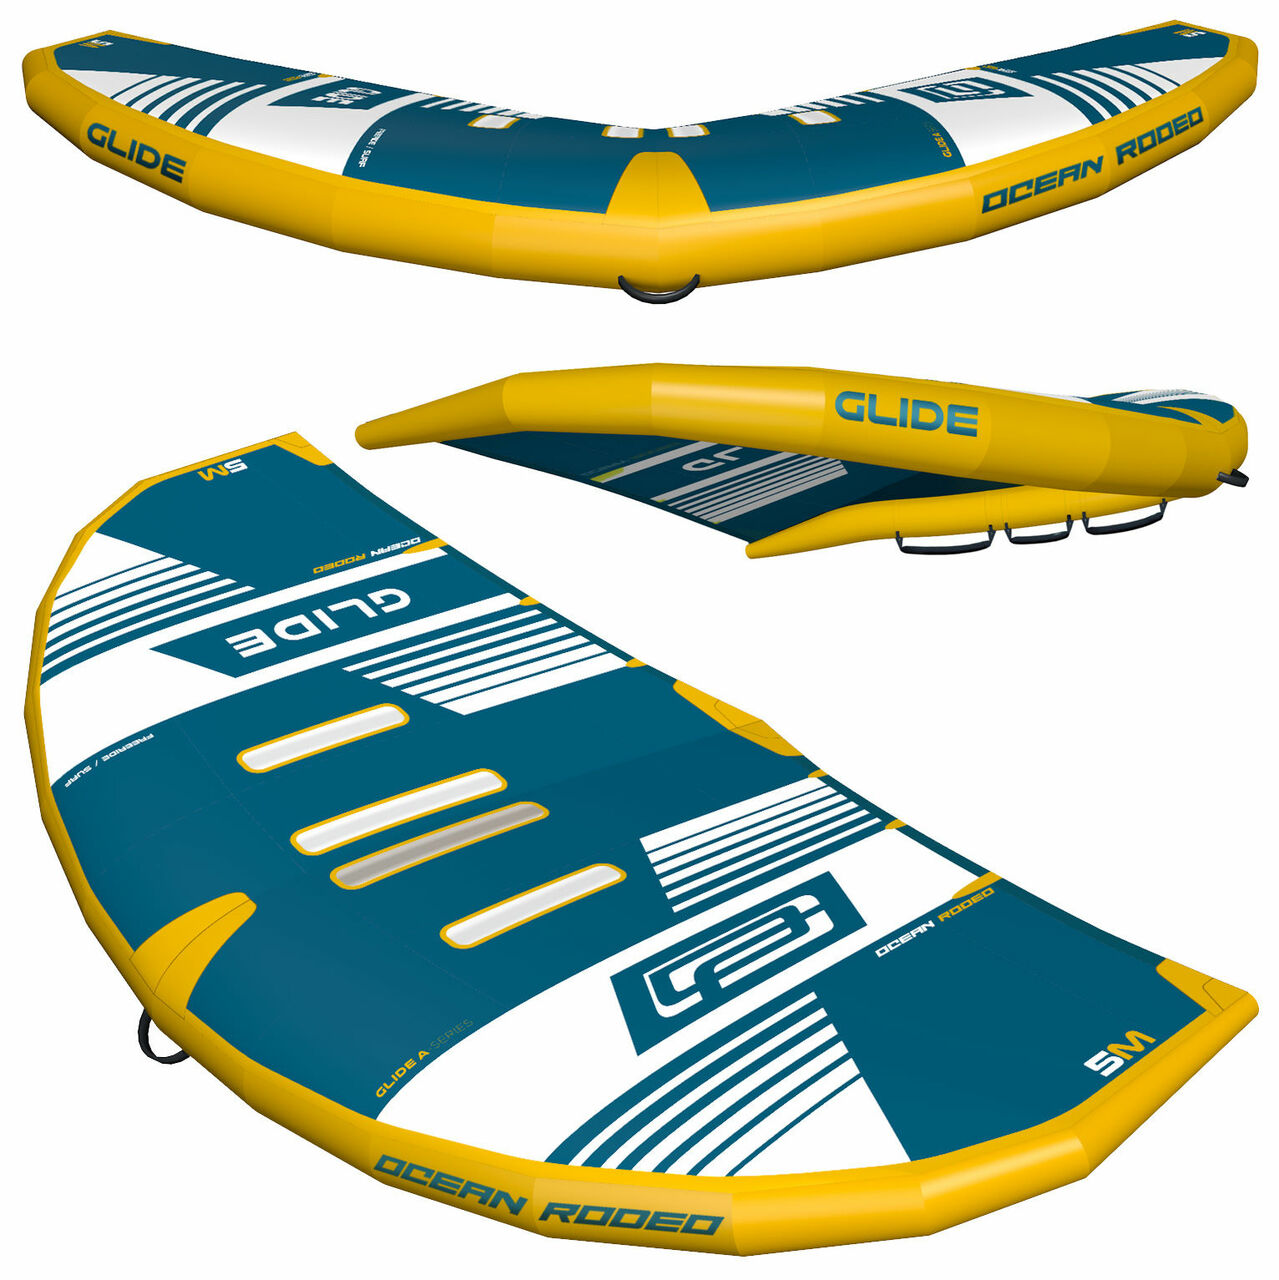 Ocean Rodeo Glide A-Series